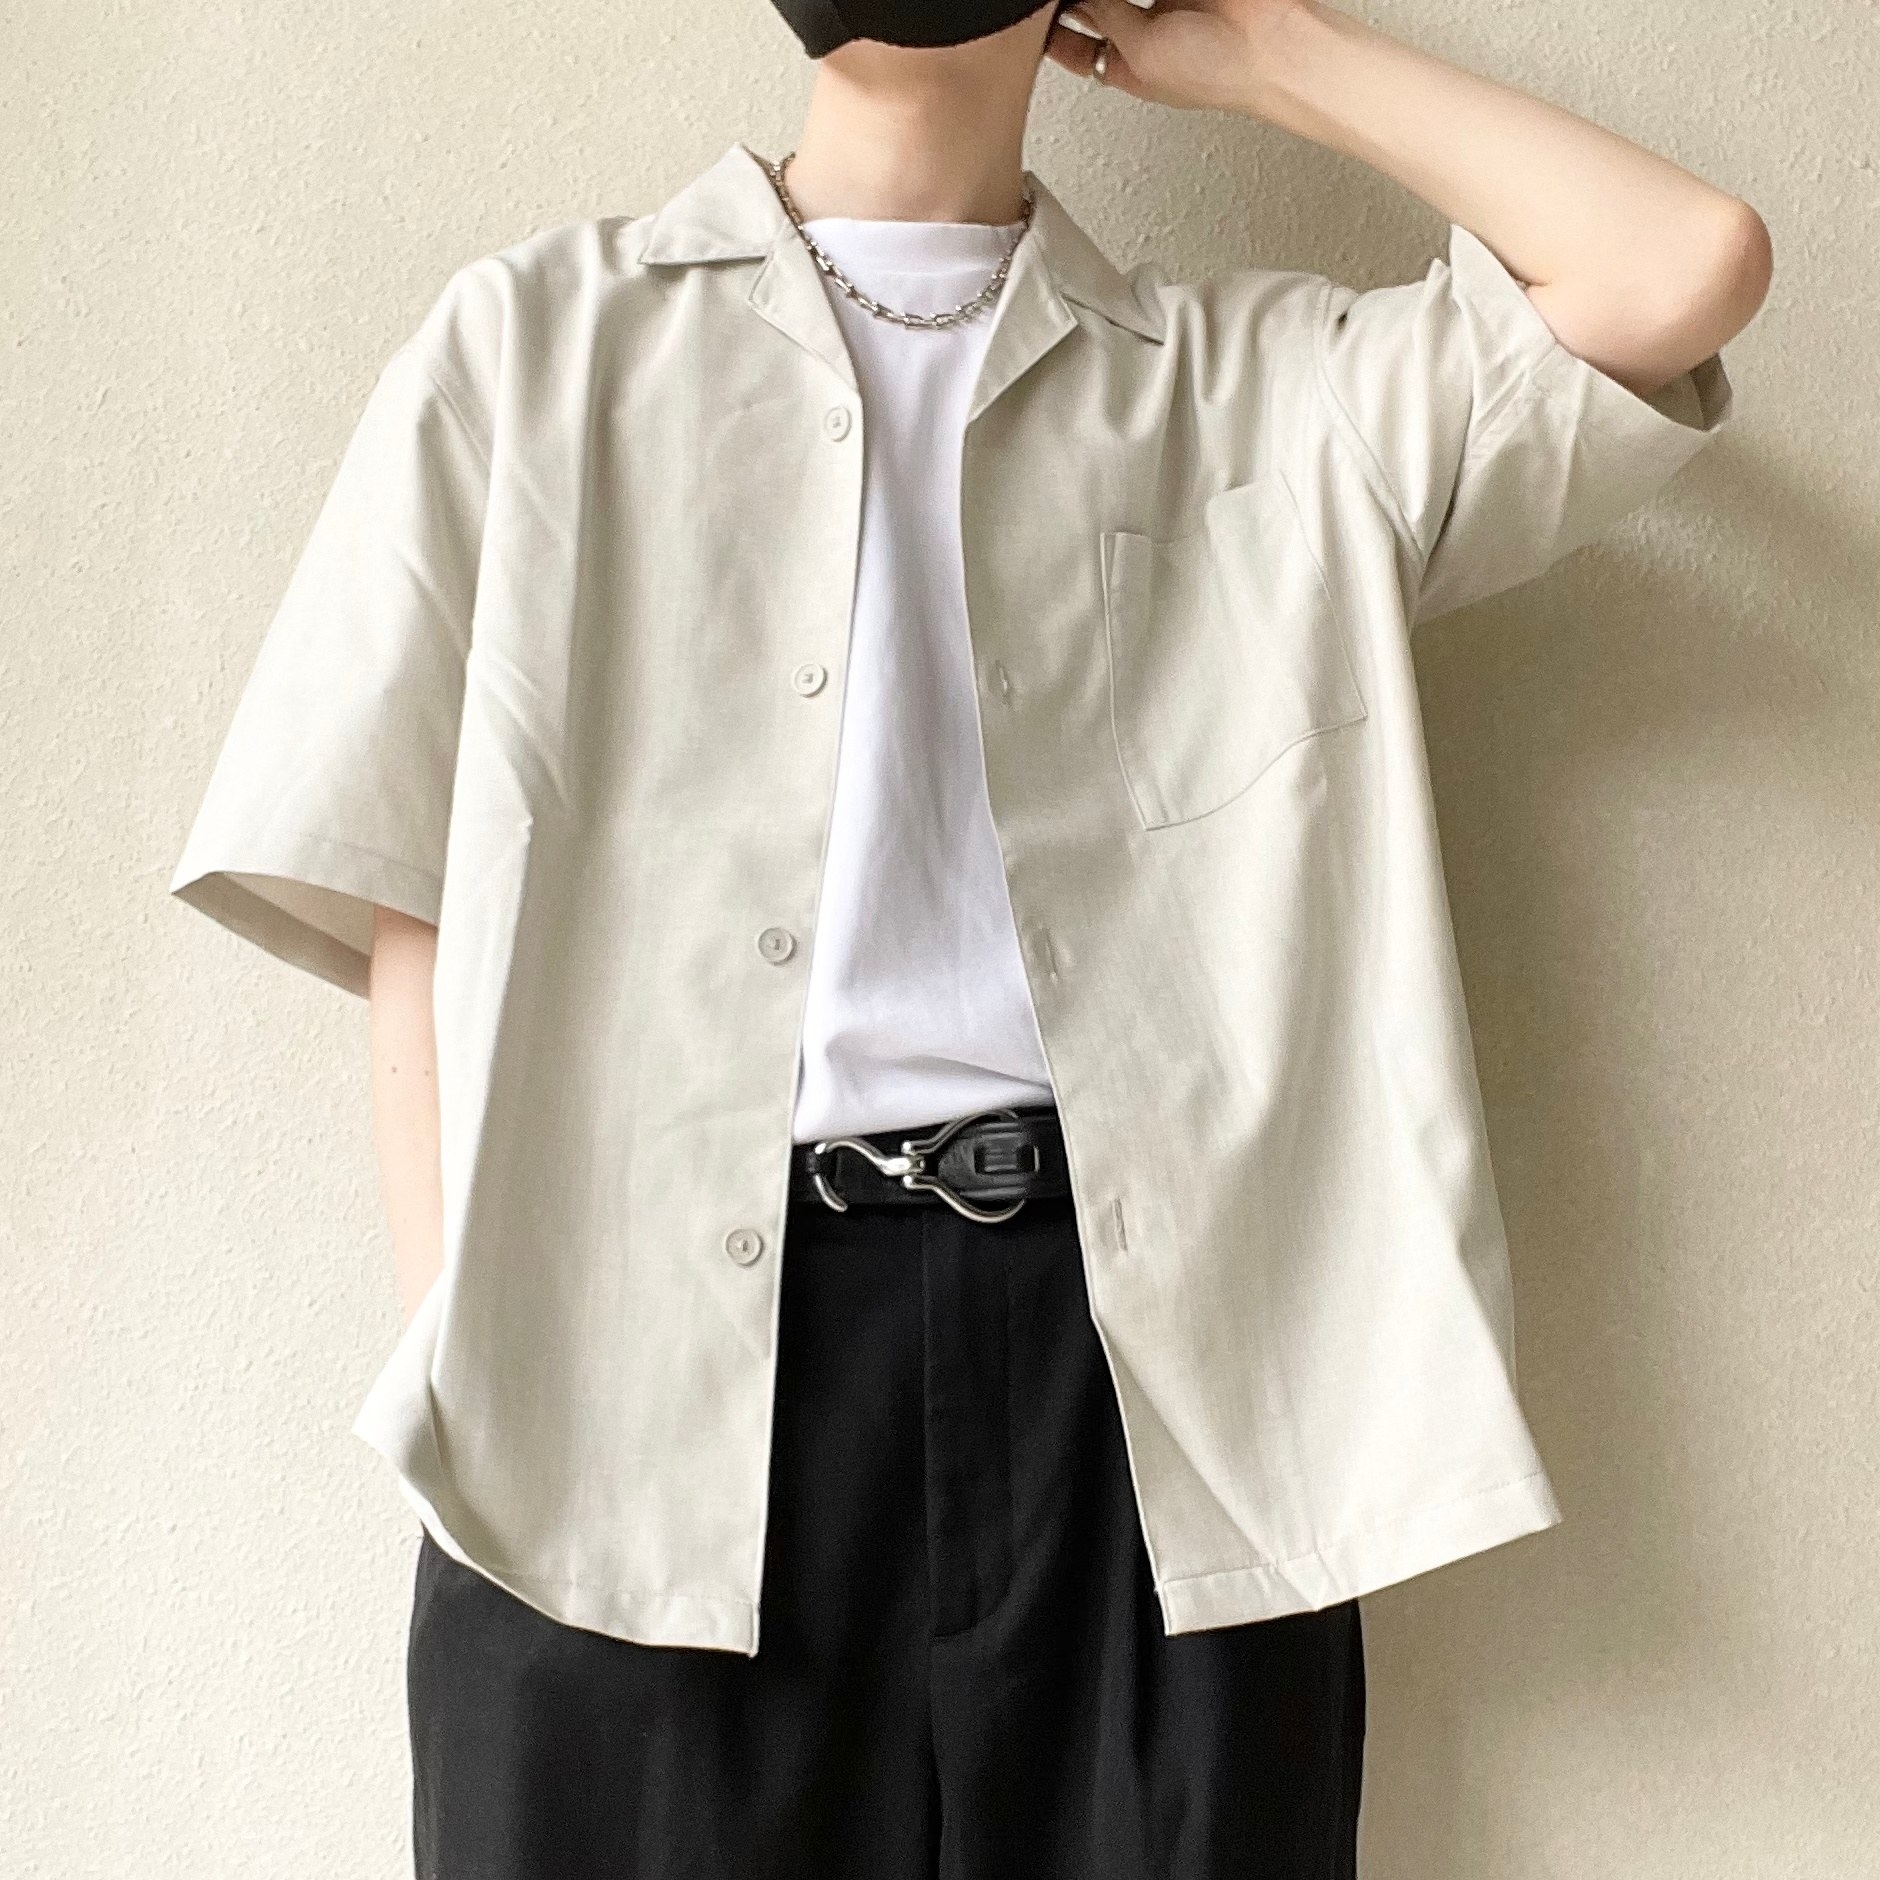 GU（ジーユー）の新作メンズアイテム「ドライリラックスフィットオープンカラーシャツ（5分袖）」セットアップや夏コーデにおすすめ